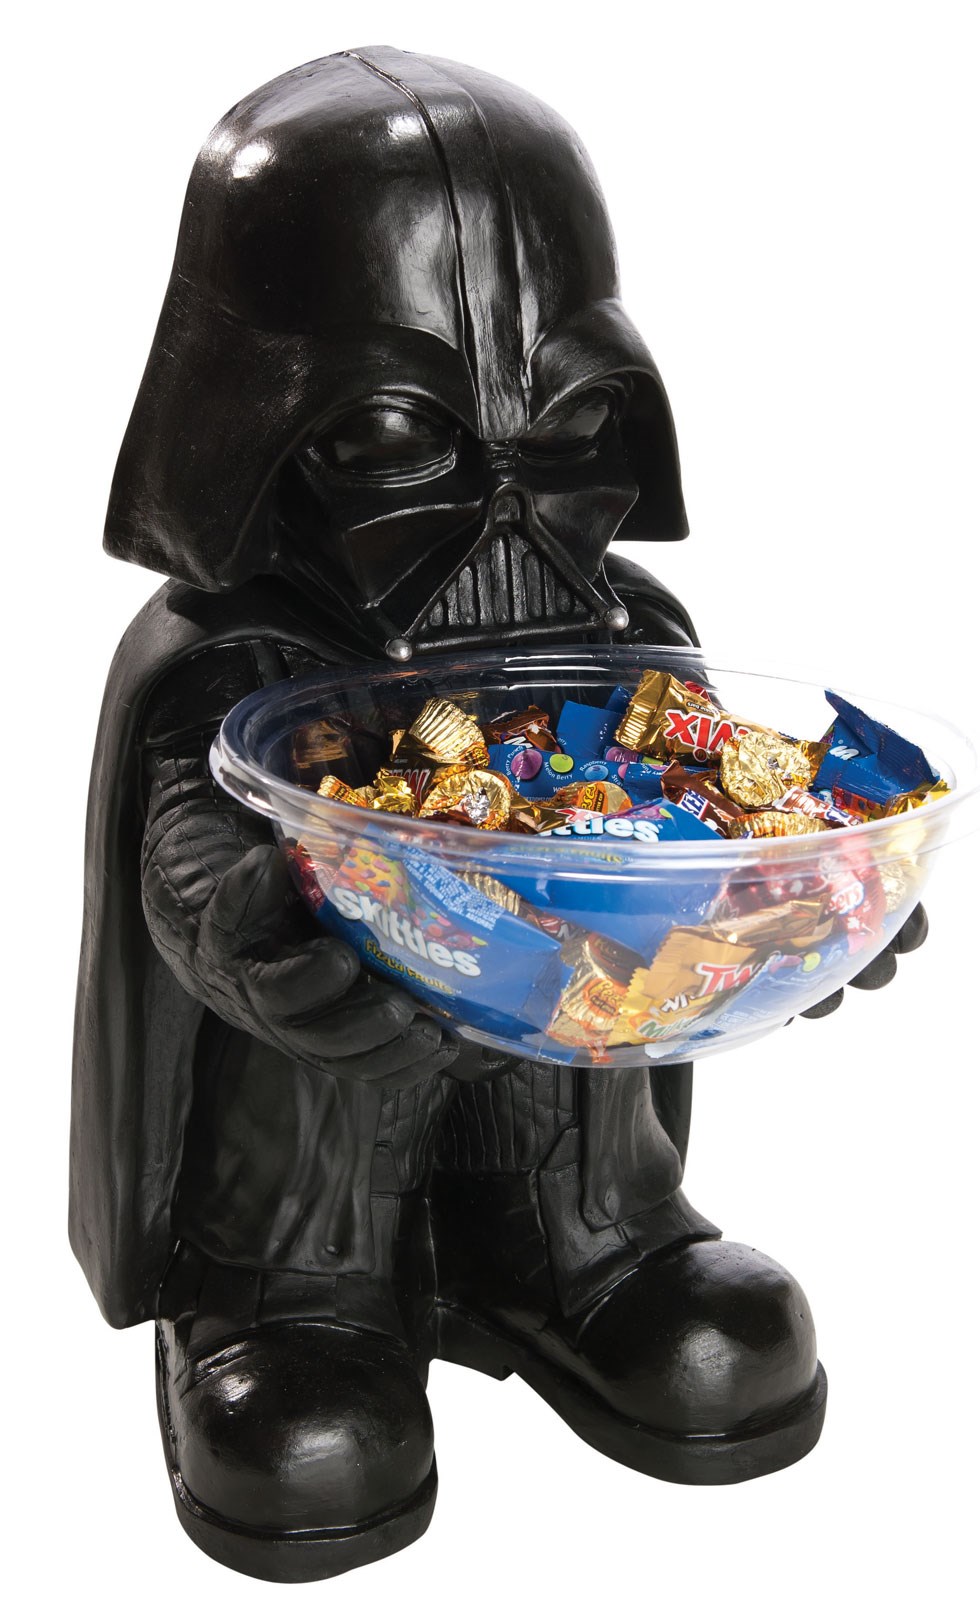 Star Wars - Darth Vader Candy Bowl and Holder